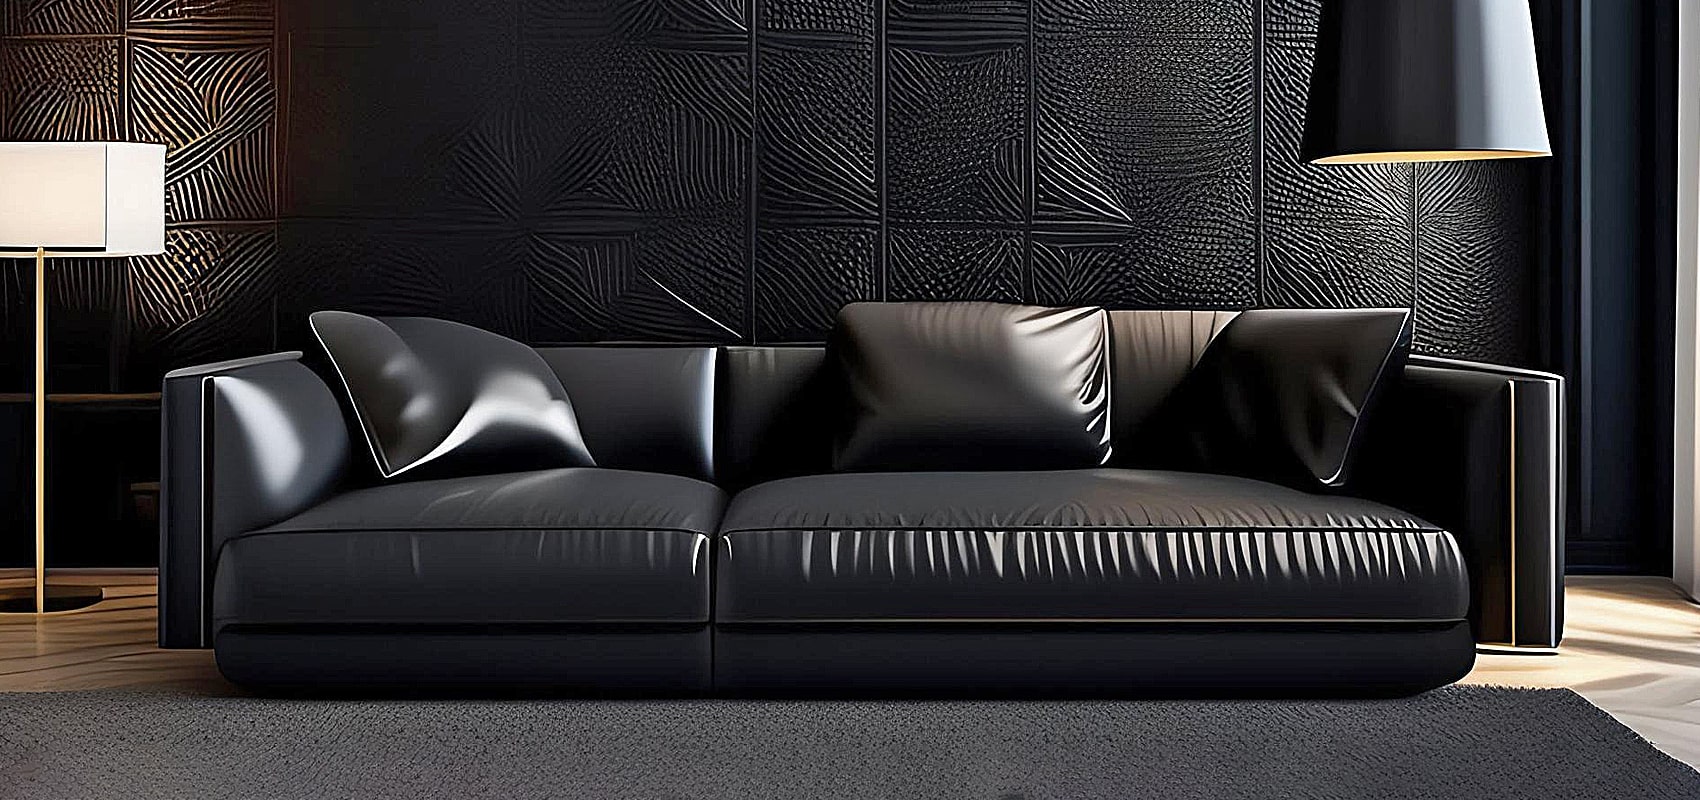 Black Couch Pillows | Black Sofa Pillows